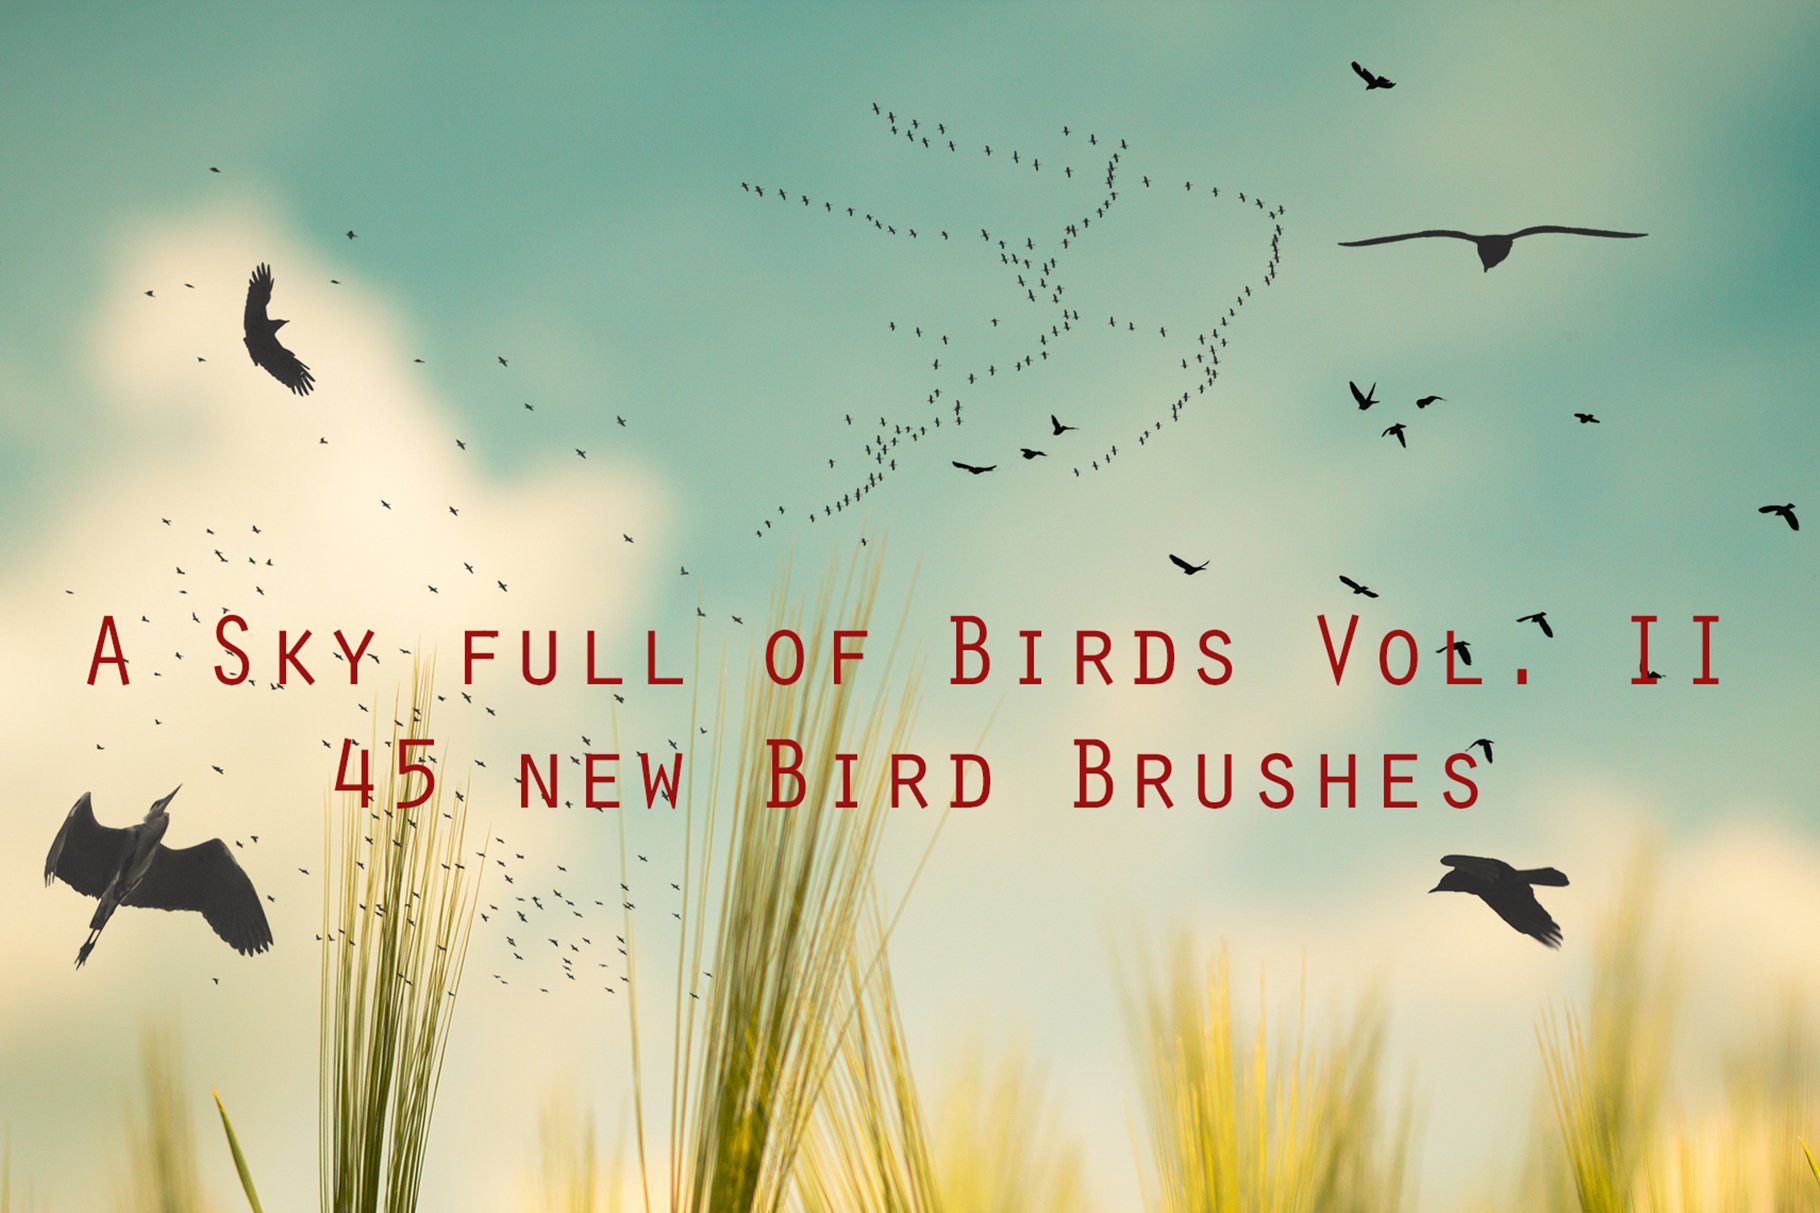 Bird Brushes Vol IIcover image.